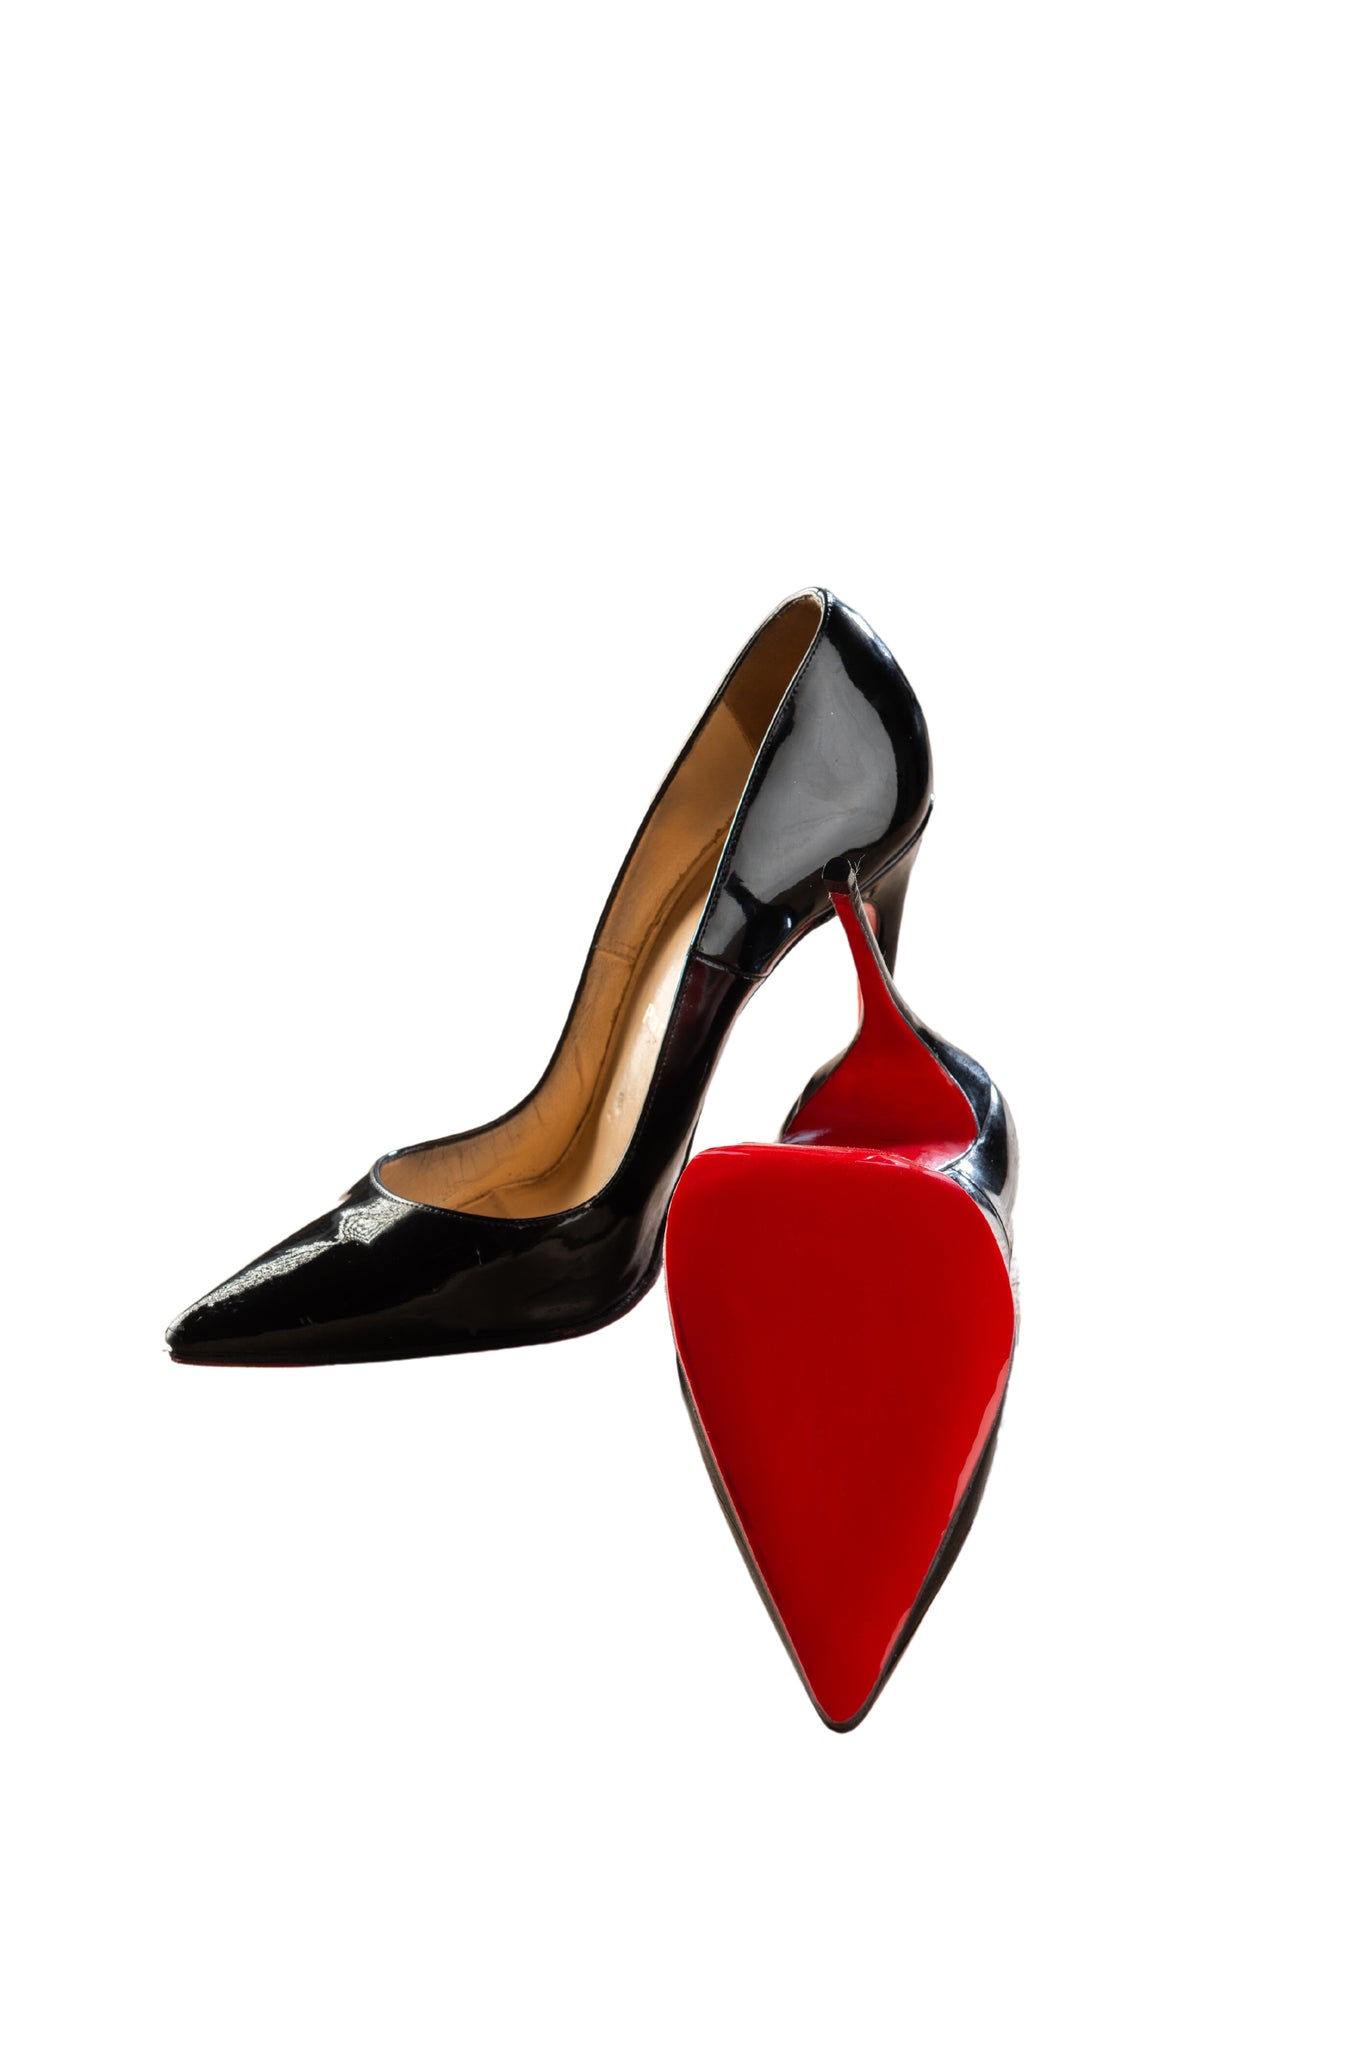 Christian Louboutin Shoe Repair | Total Repair Service | Red | New Heels | Resole – redsoles